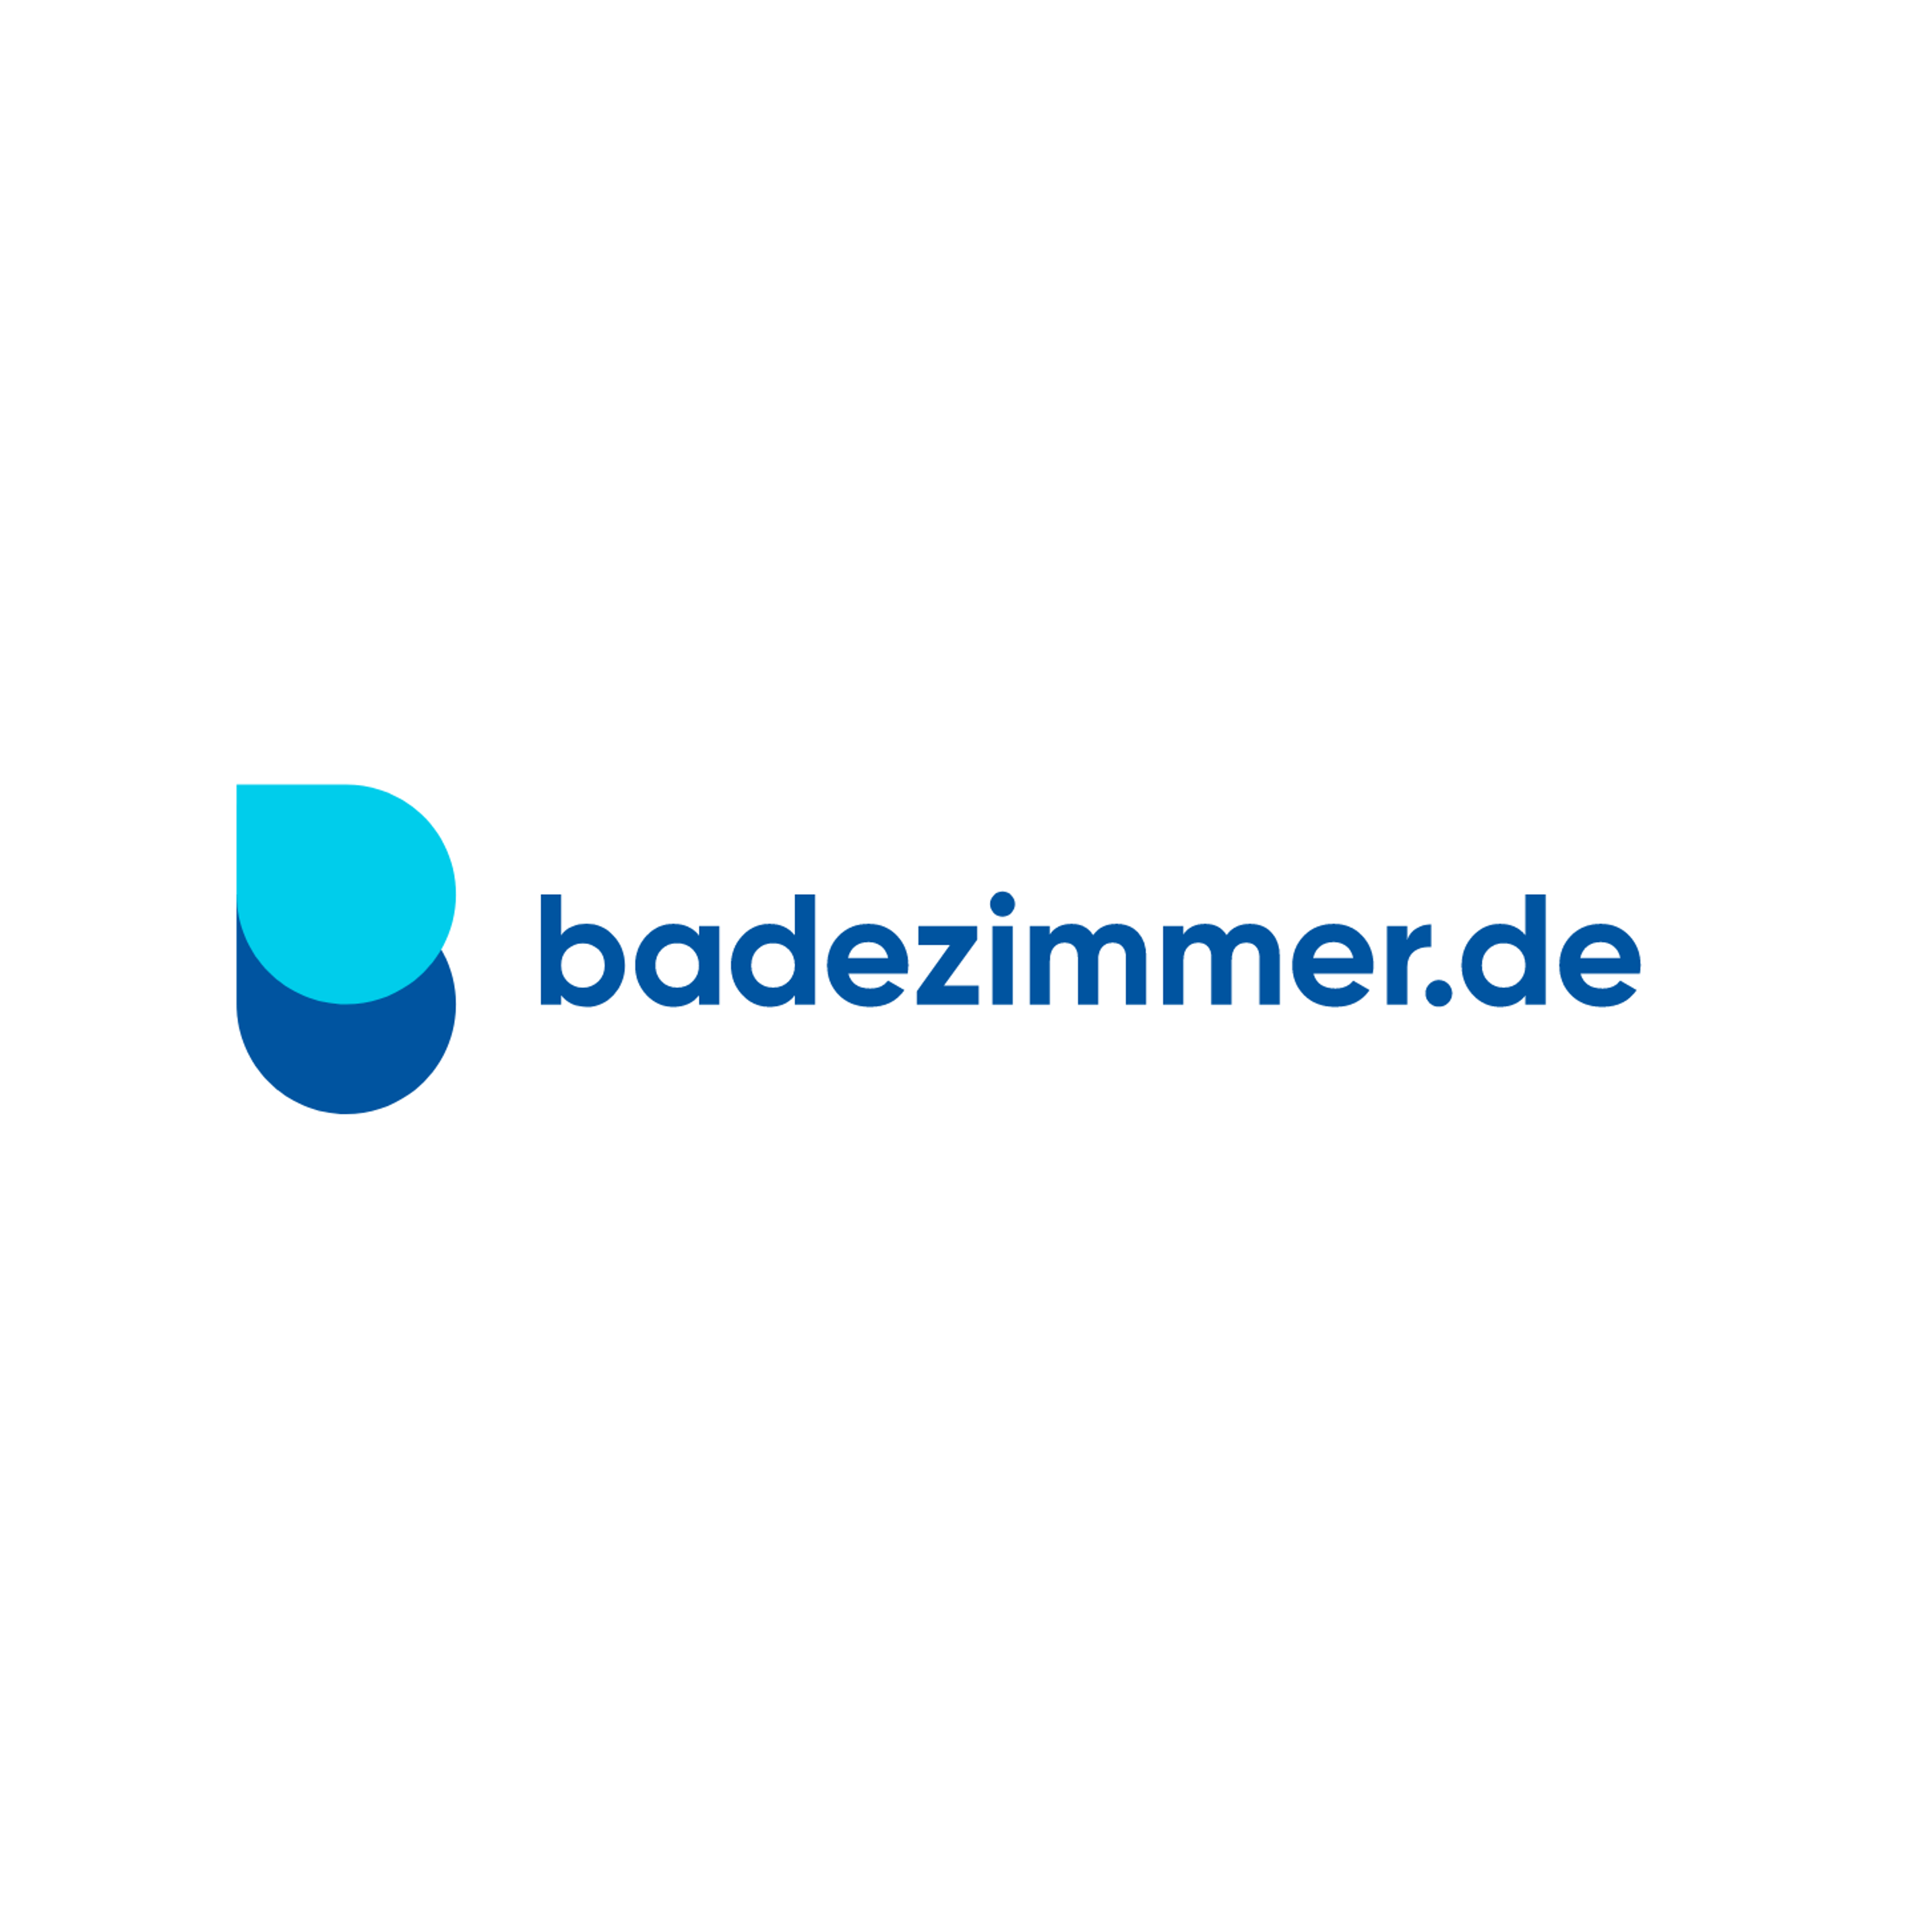 badezimmer.de Badausstellung Remscheid - Reinshagen & Schröder in Remscheid - Logo